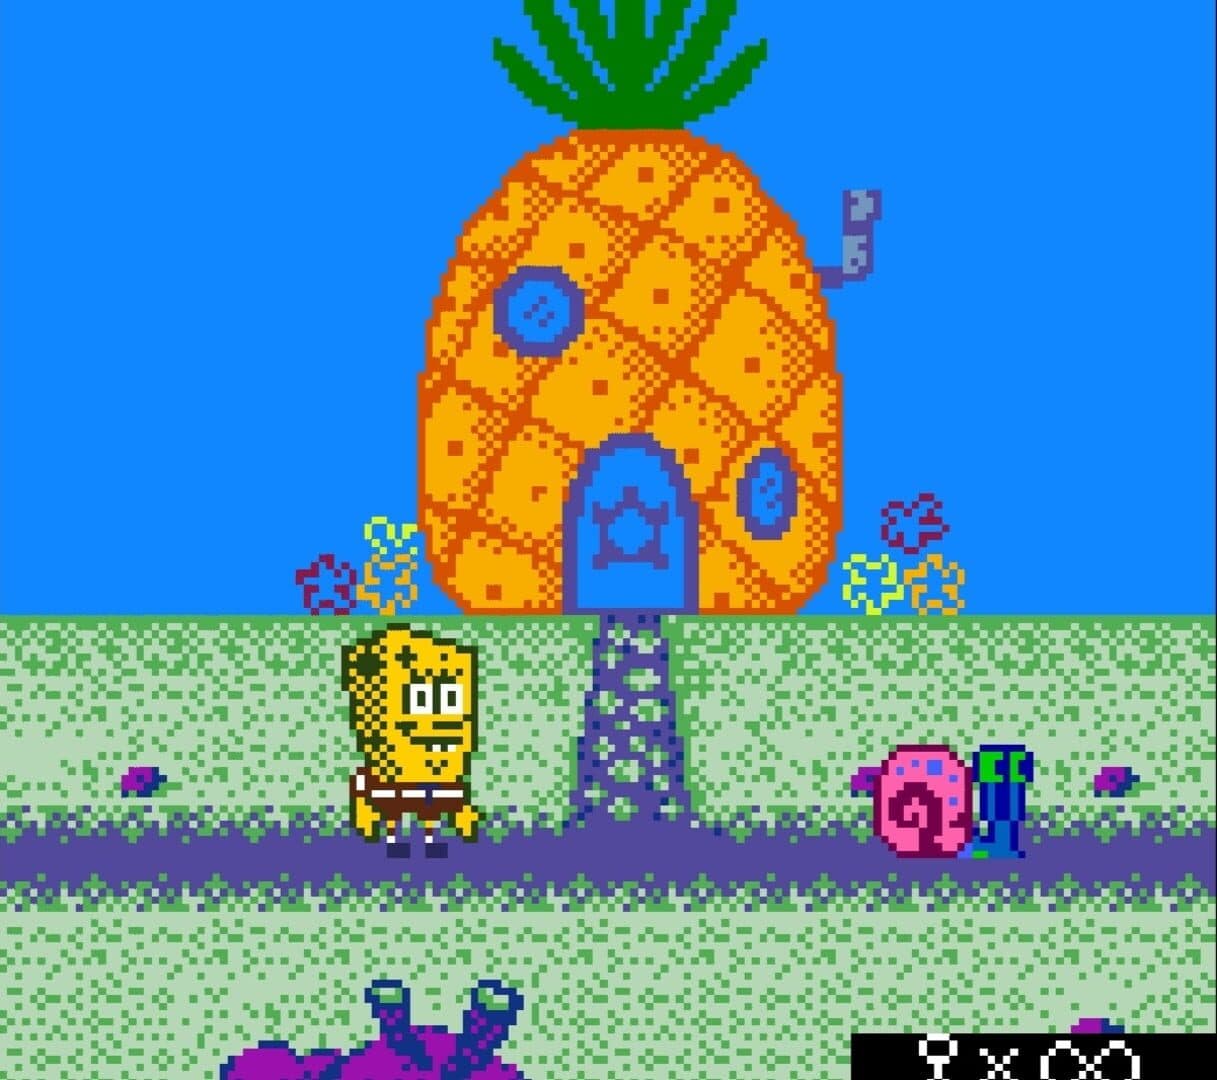 SpongeBob SquarePants: Legend of the Lost Spatula Image